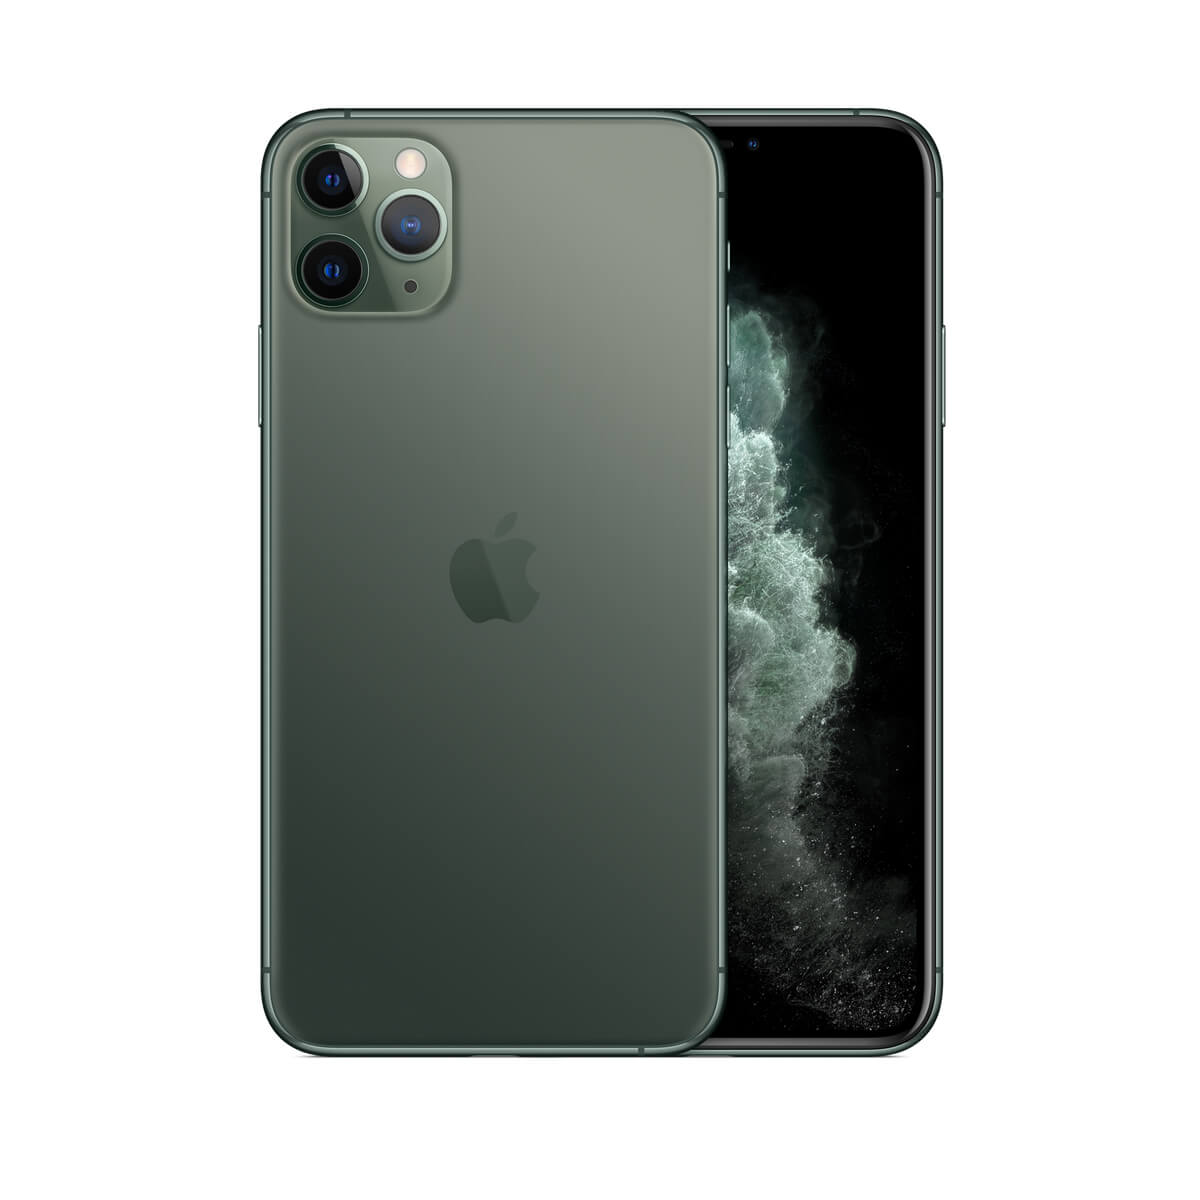 Apple iPhone 11 Pro Max (64G)